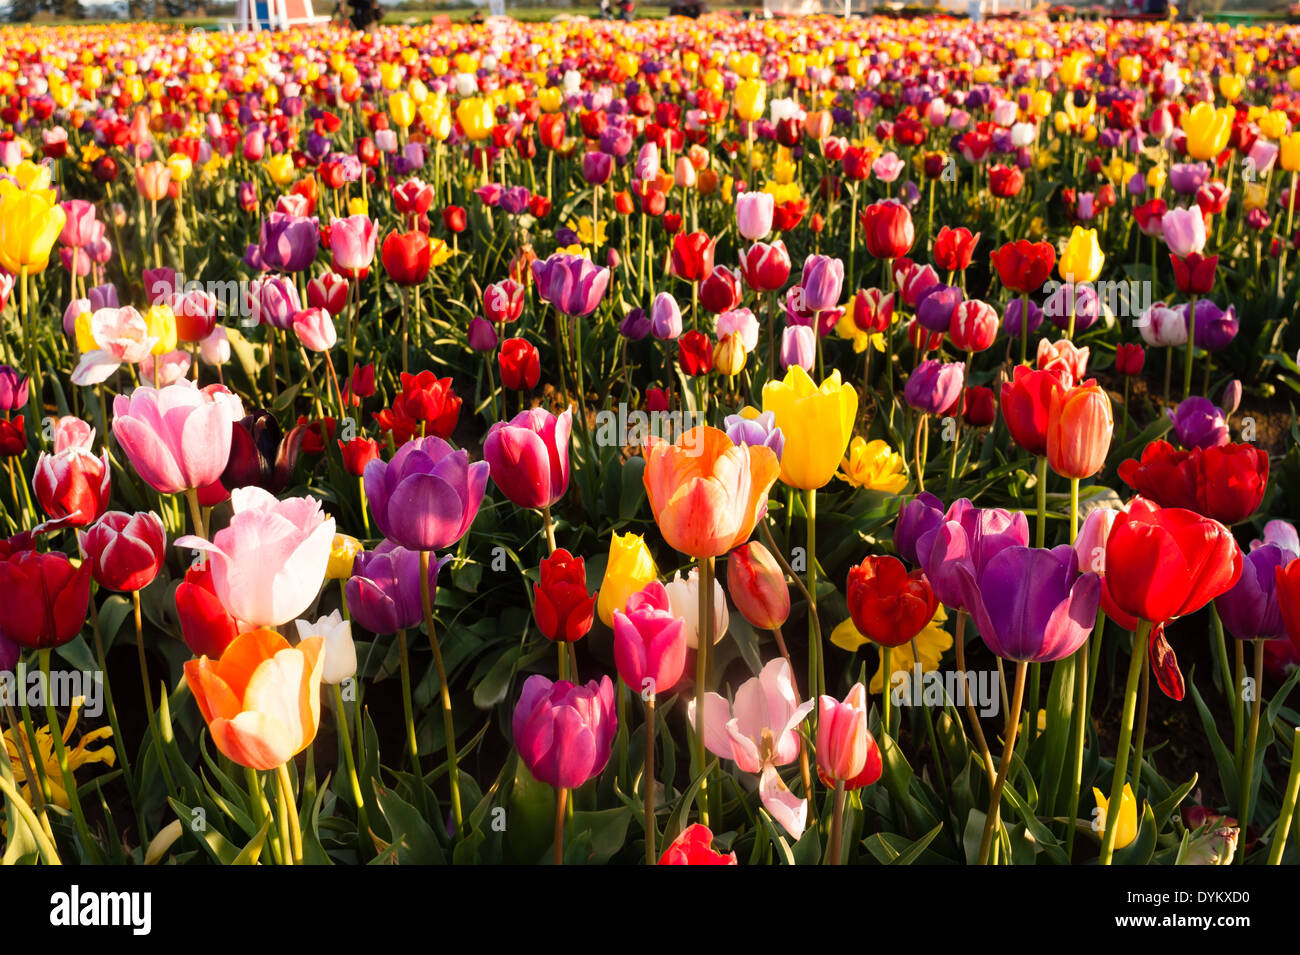 Composición horizontal de un gran campo lleno de tulipanes listo para cosechar Foto de stock